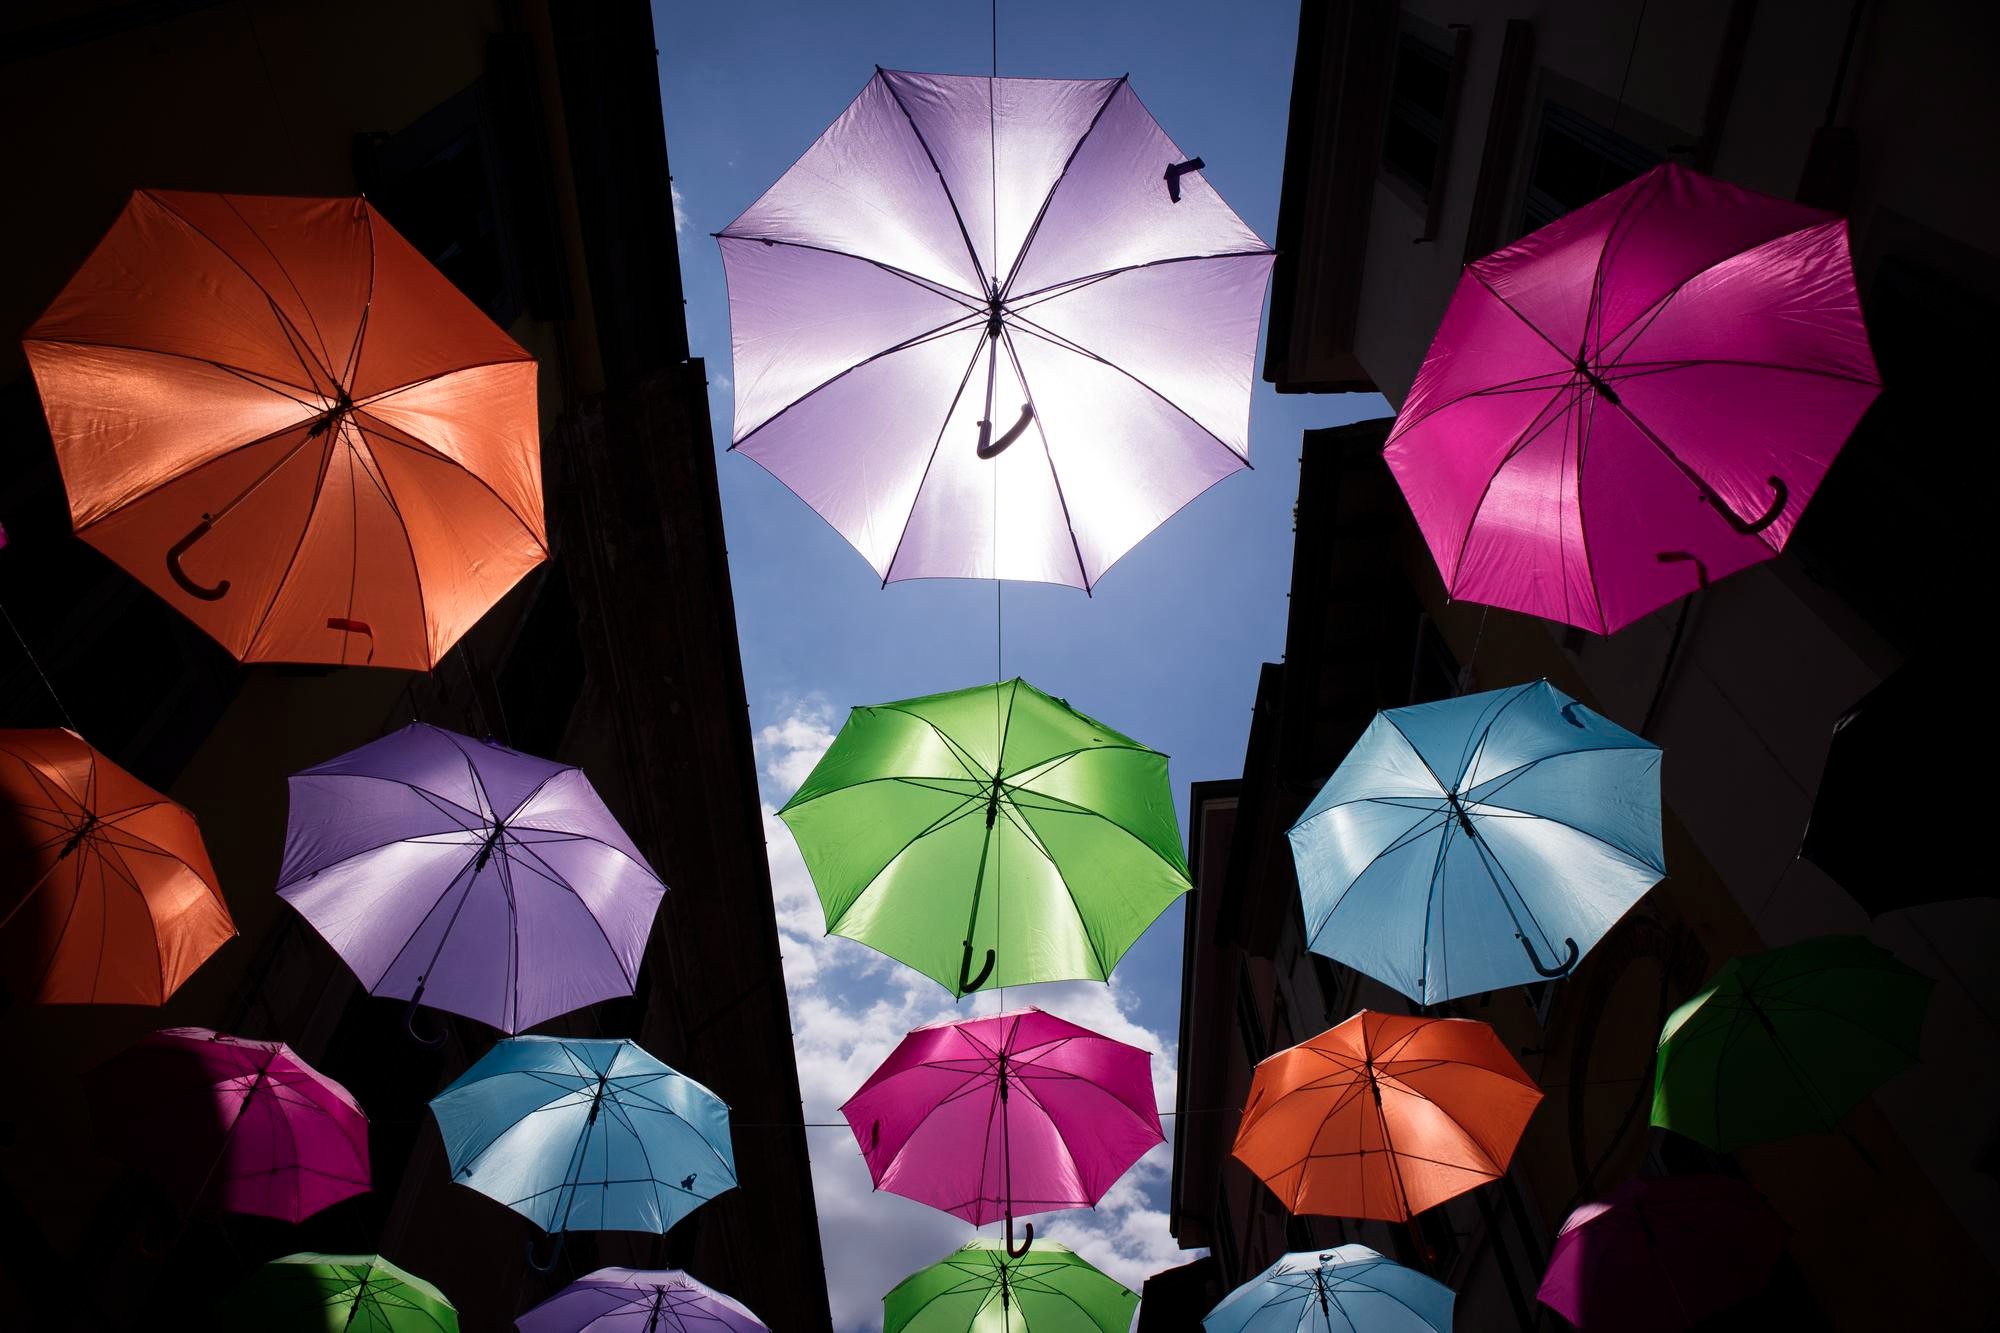 umbrellas of different colors